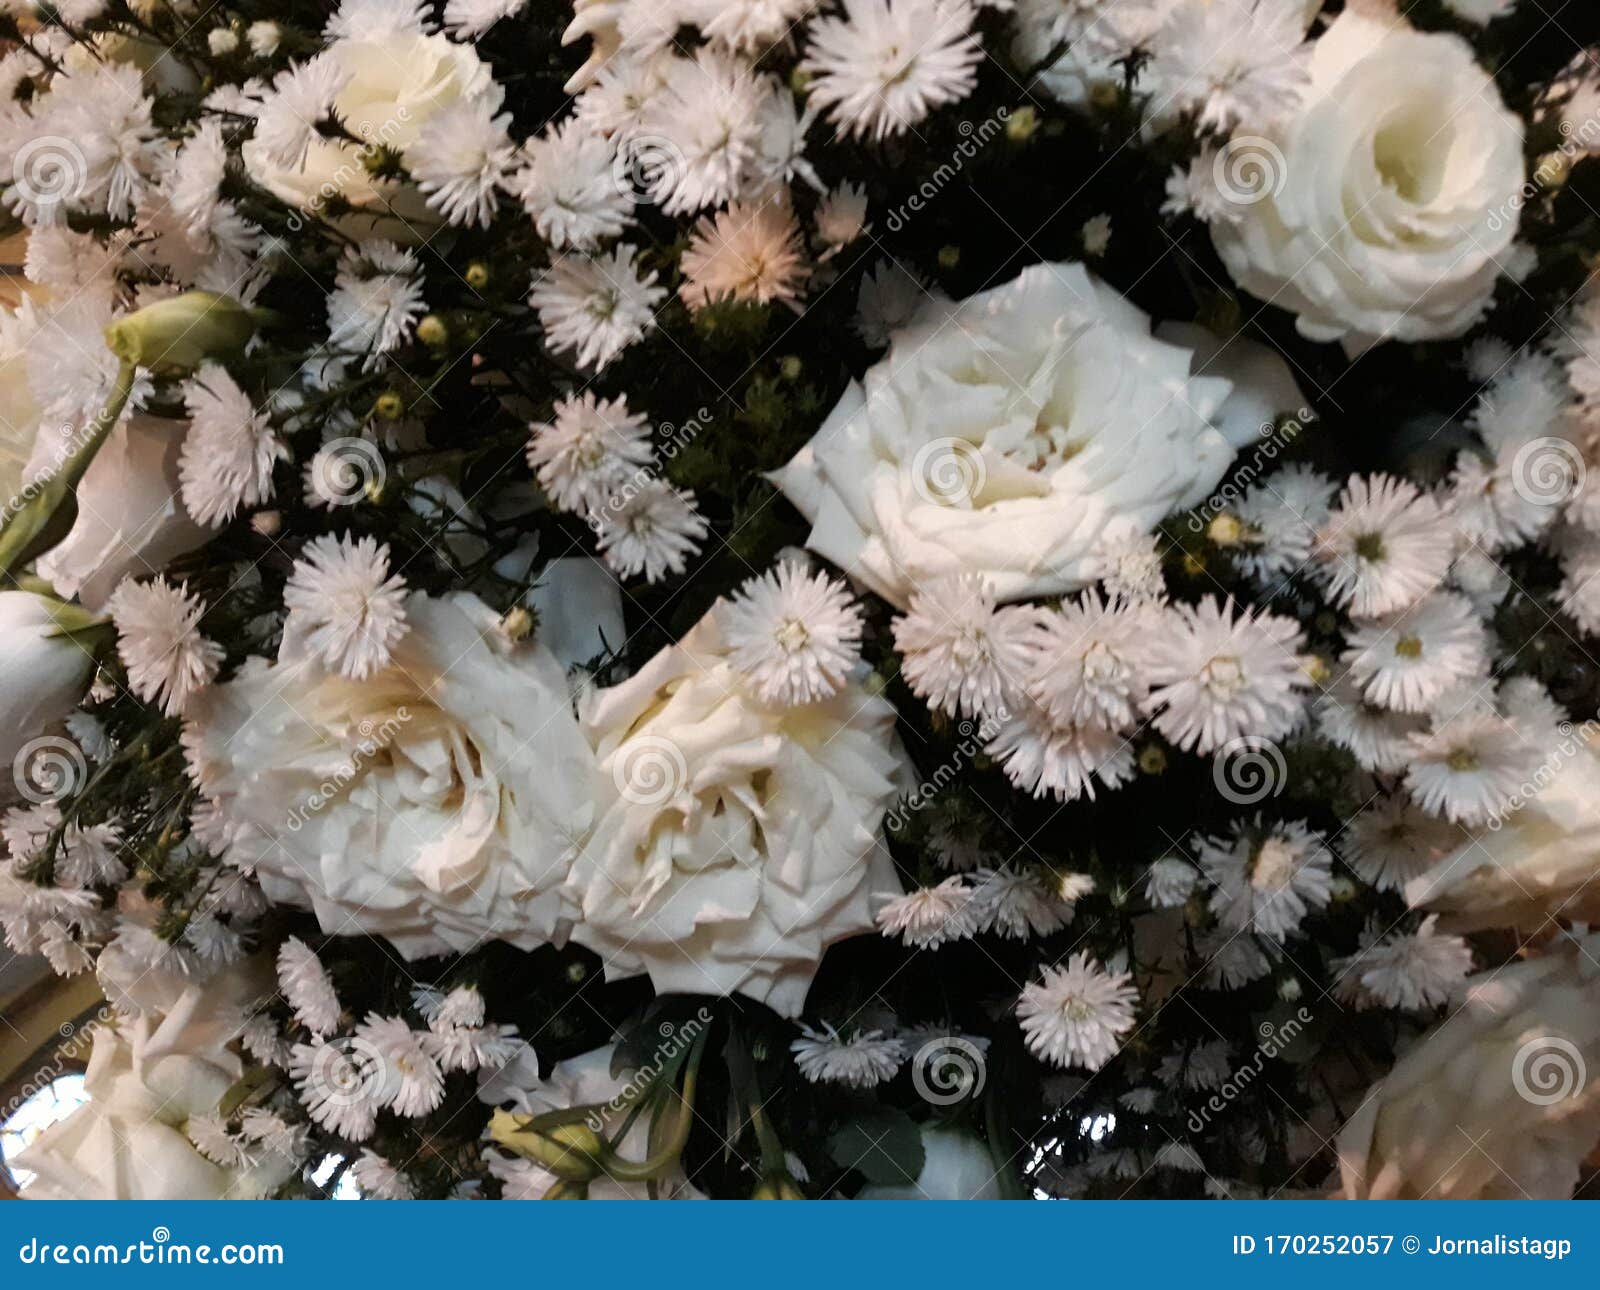 wedding floral arrangement close up